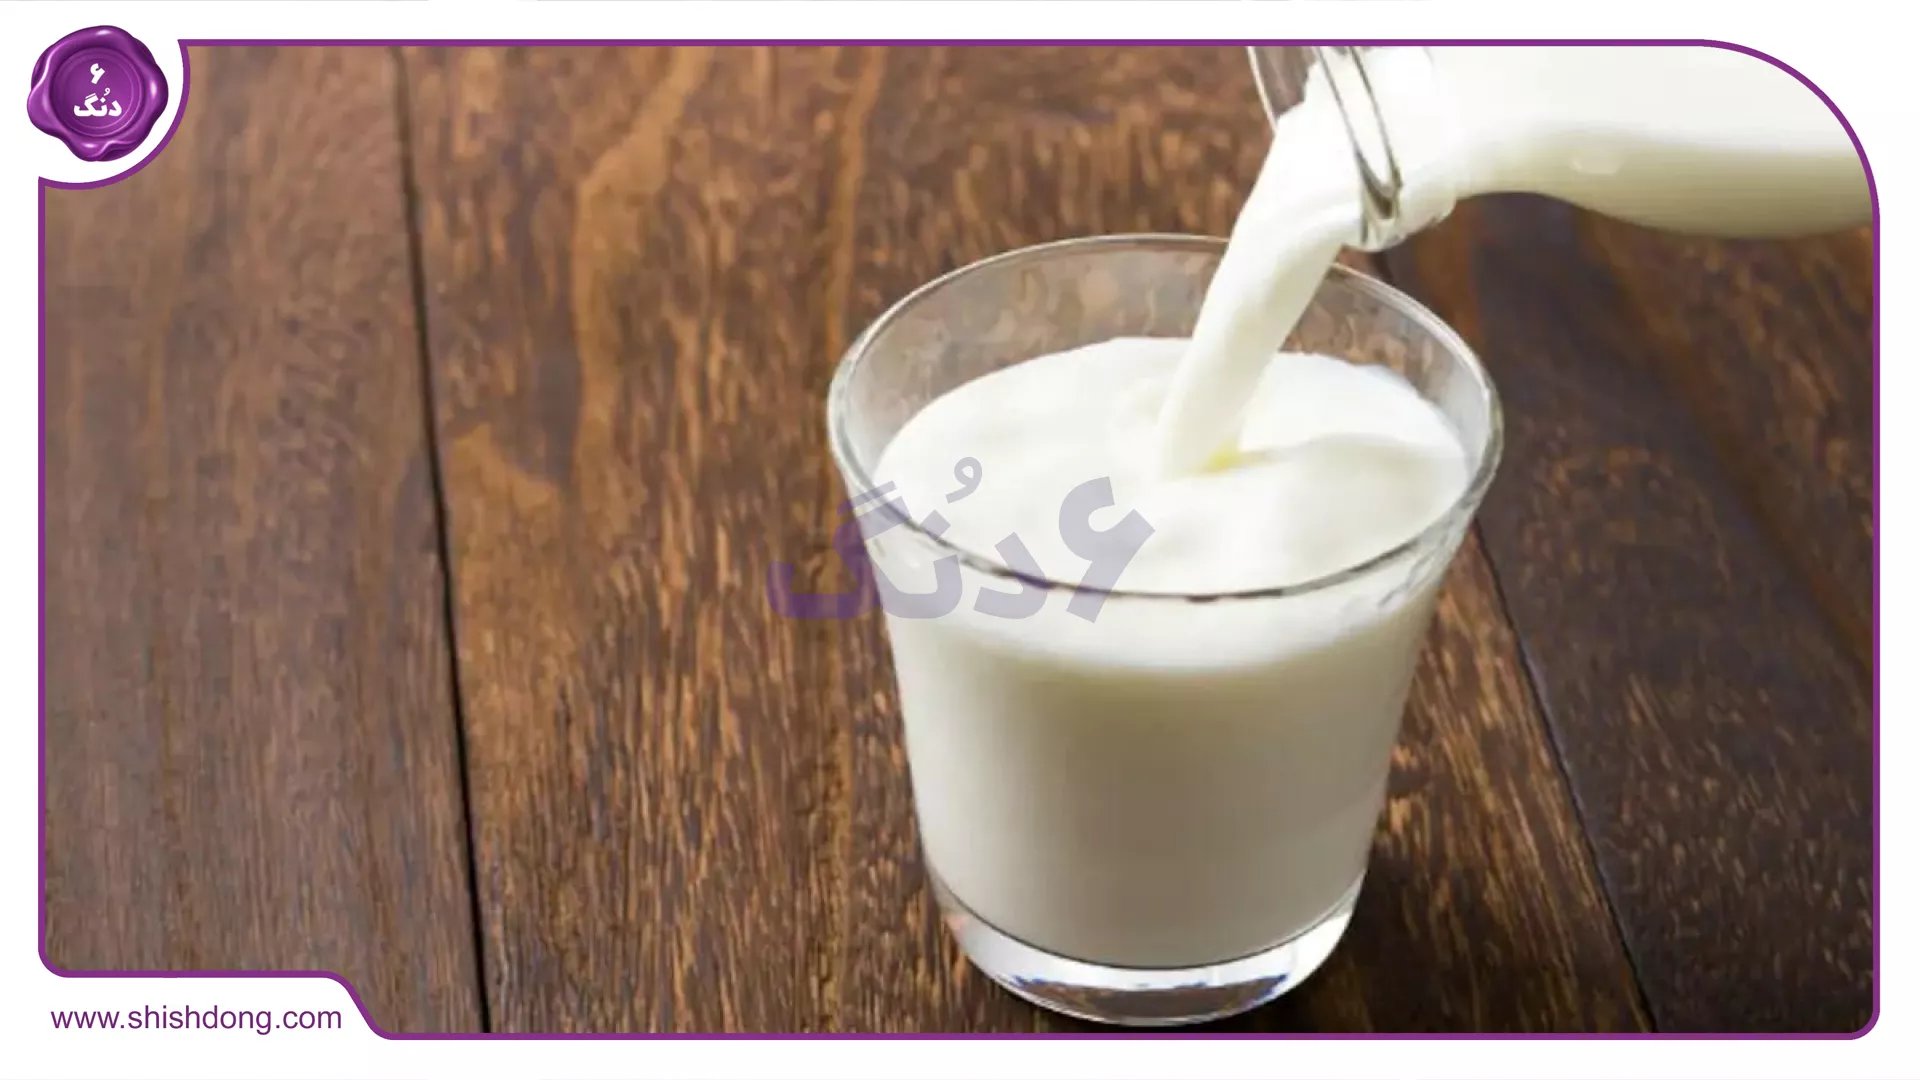 شیر منبع کلسیم